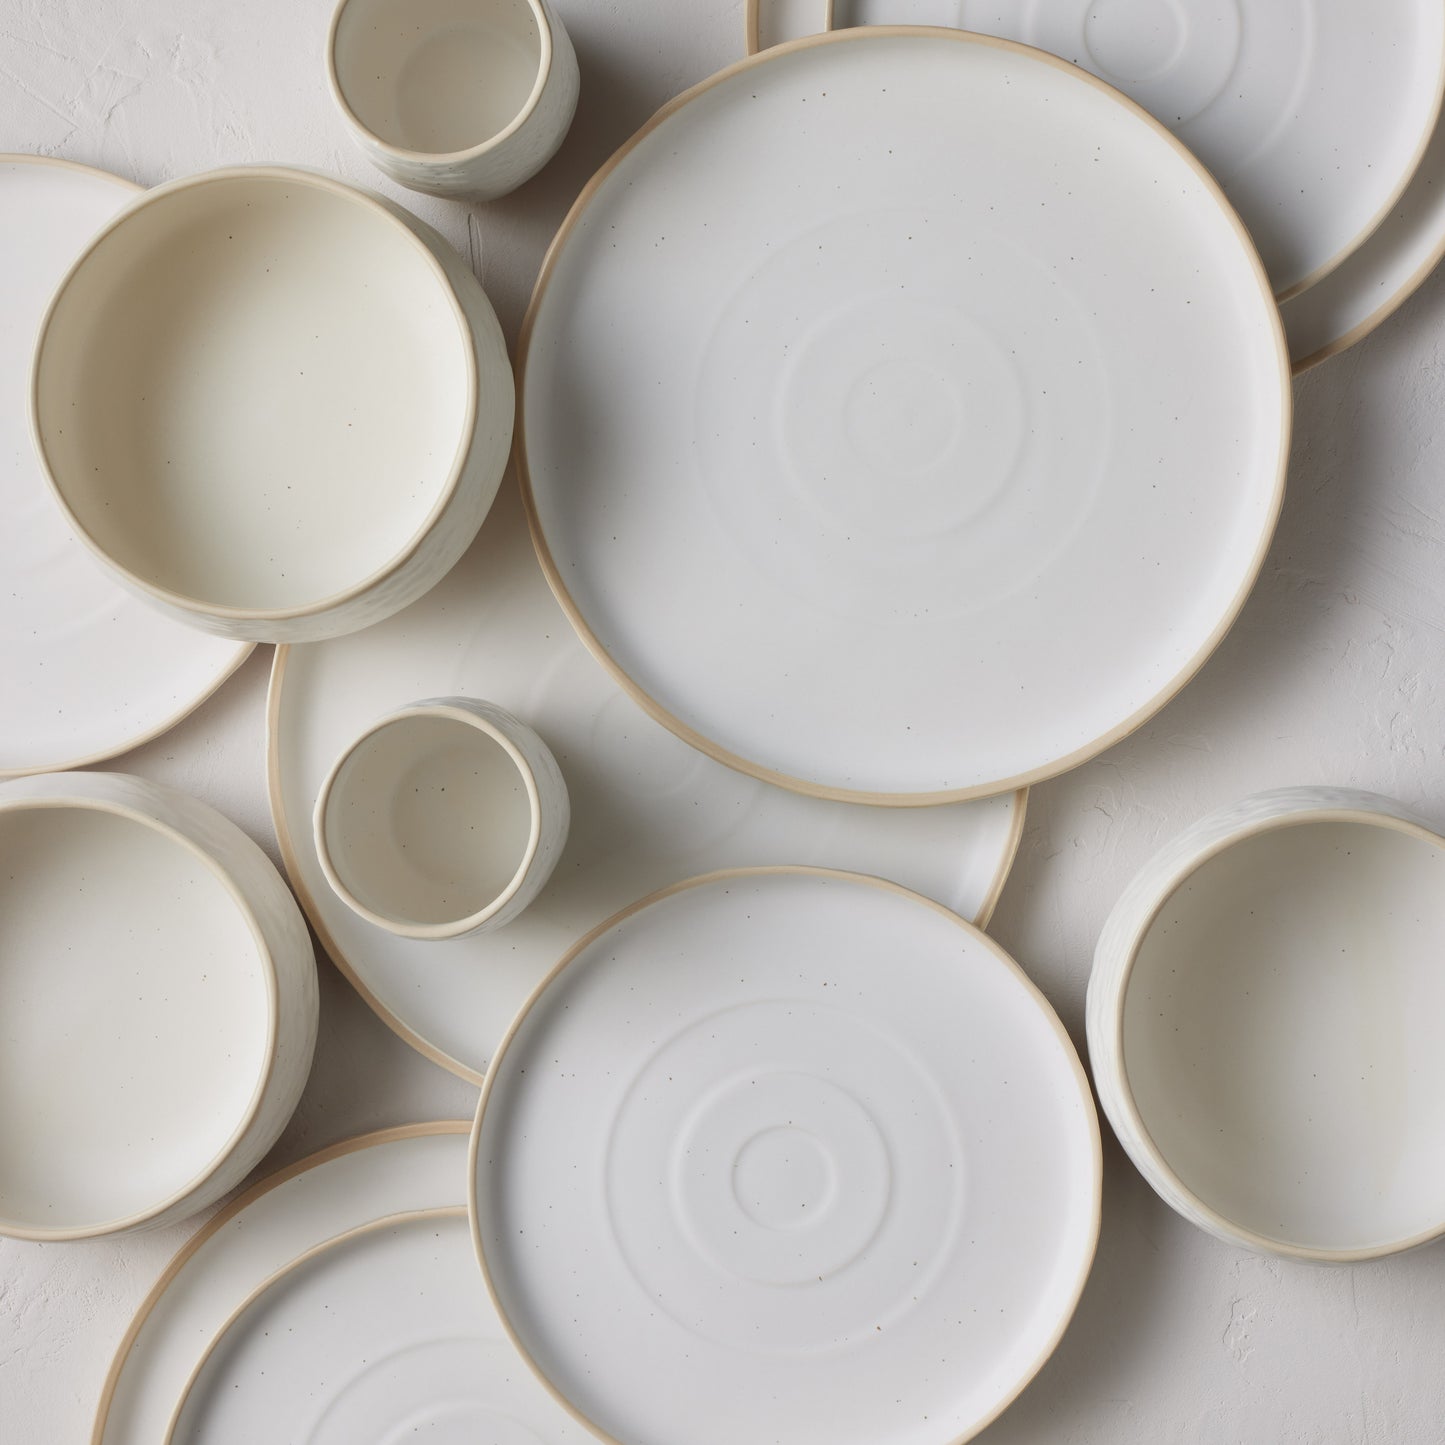 Shosai Stoneware Dinnerware Set - White Speckled